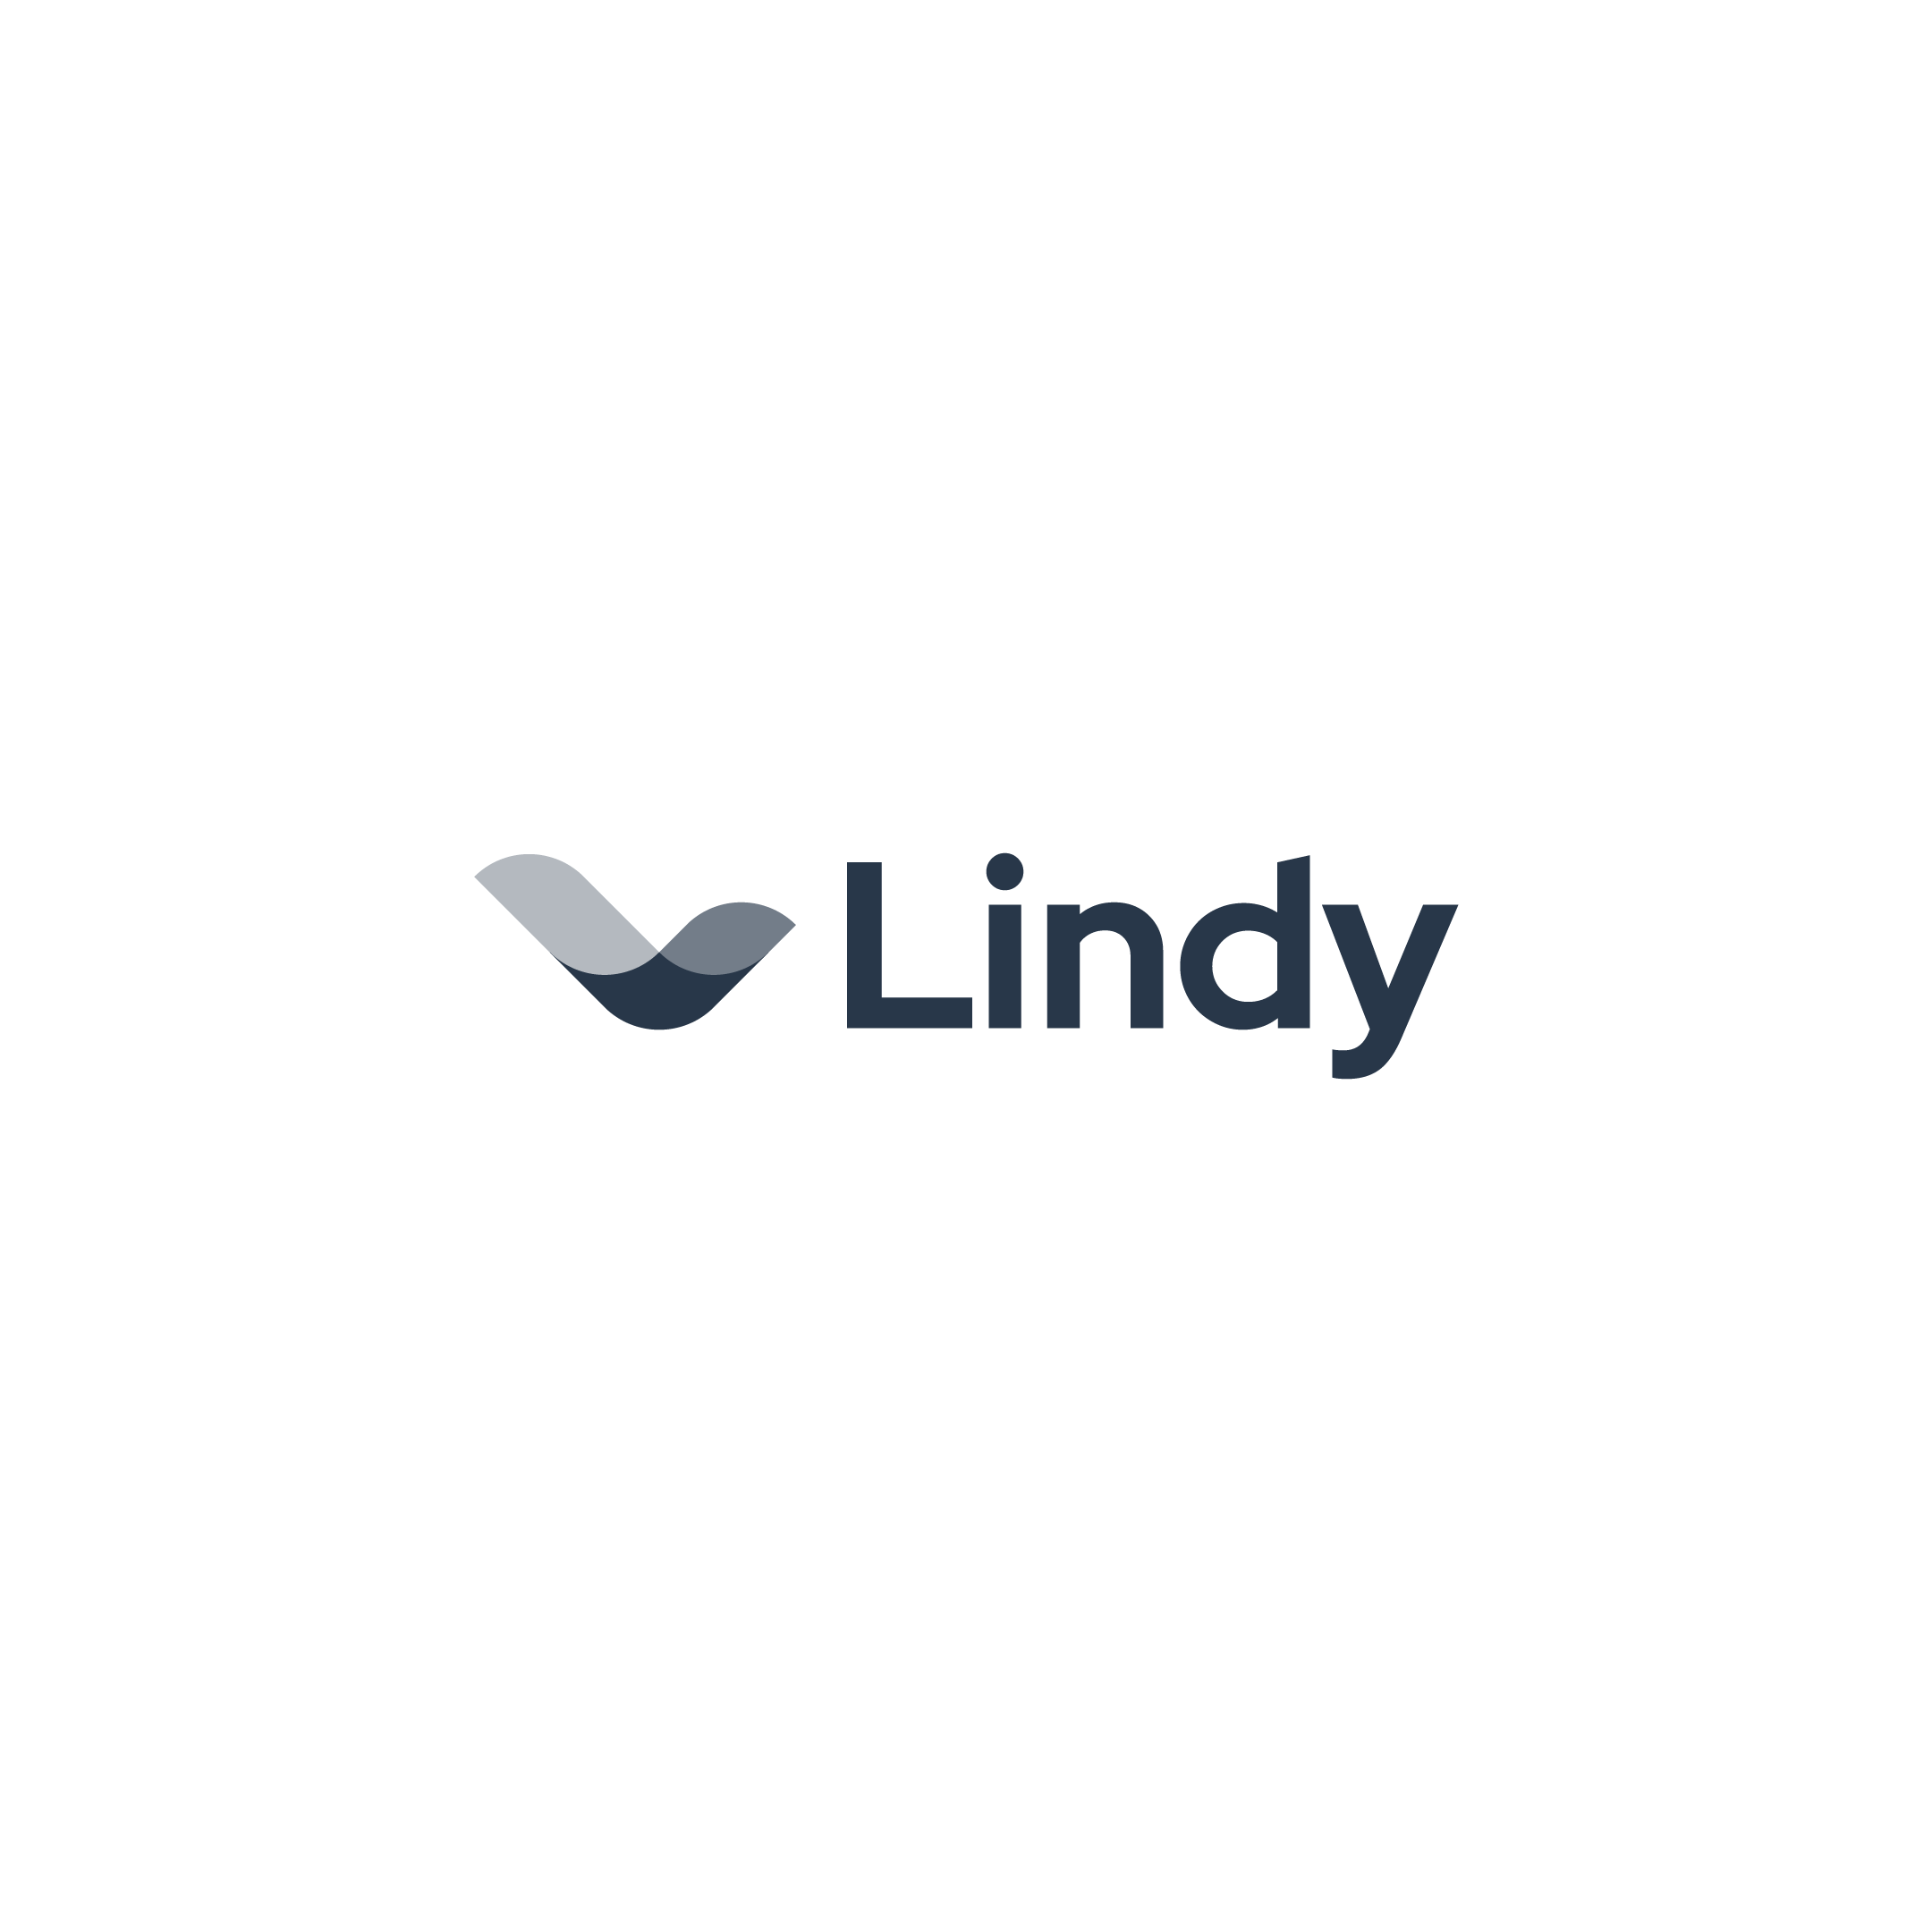 Lindy_grey_1